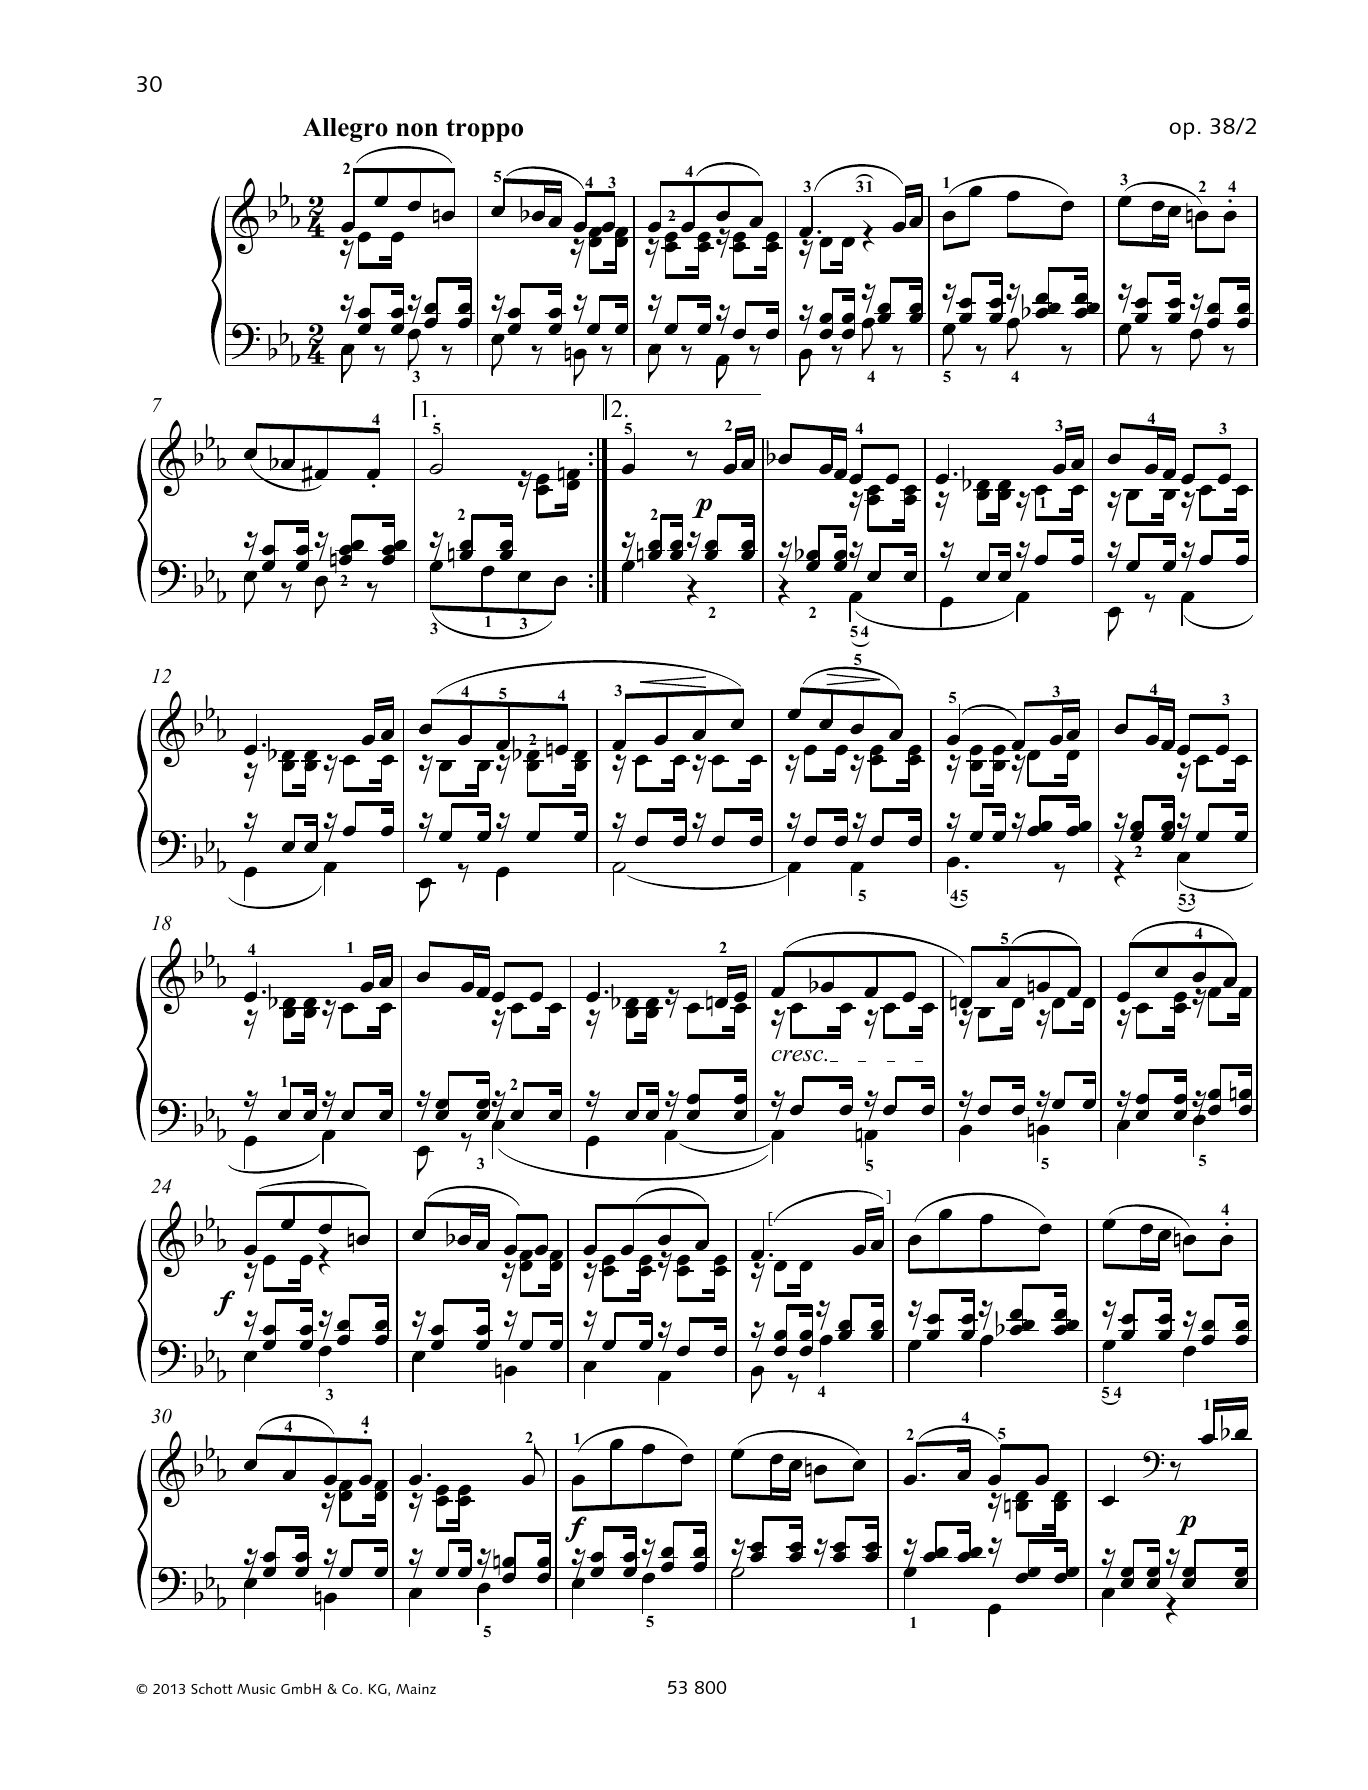 Felix Mendelssohn Bartholdy Allegro non troppo Sheet Music Notes & Chords for Piano Solo - Download or Print PDF